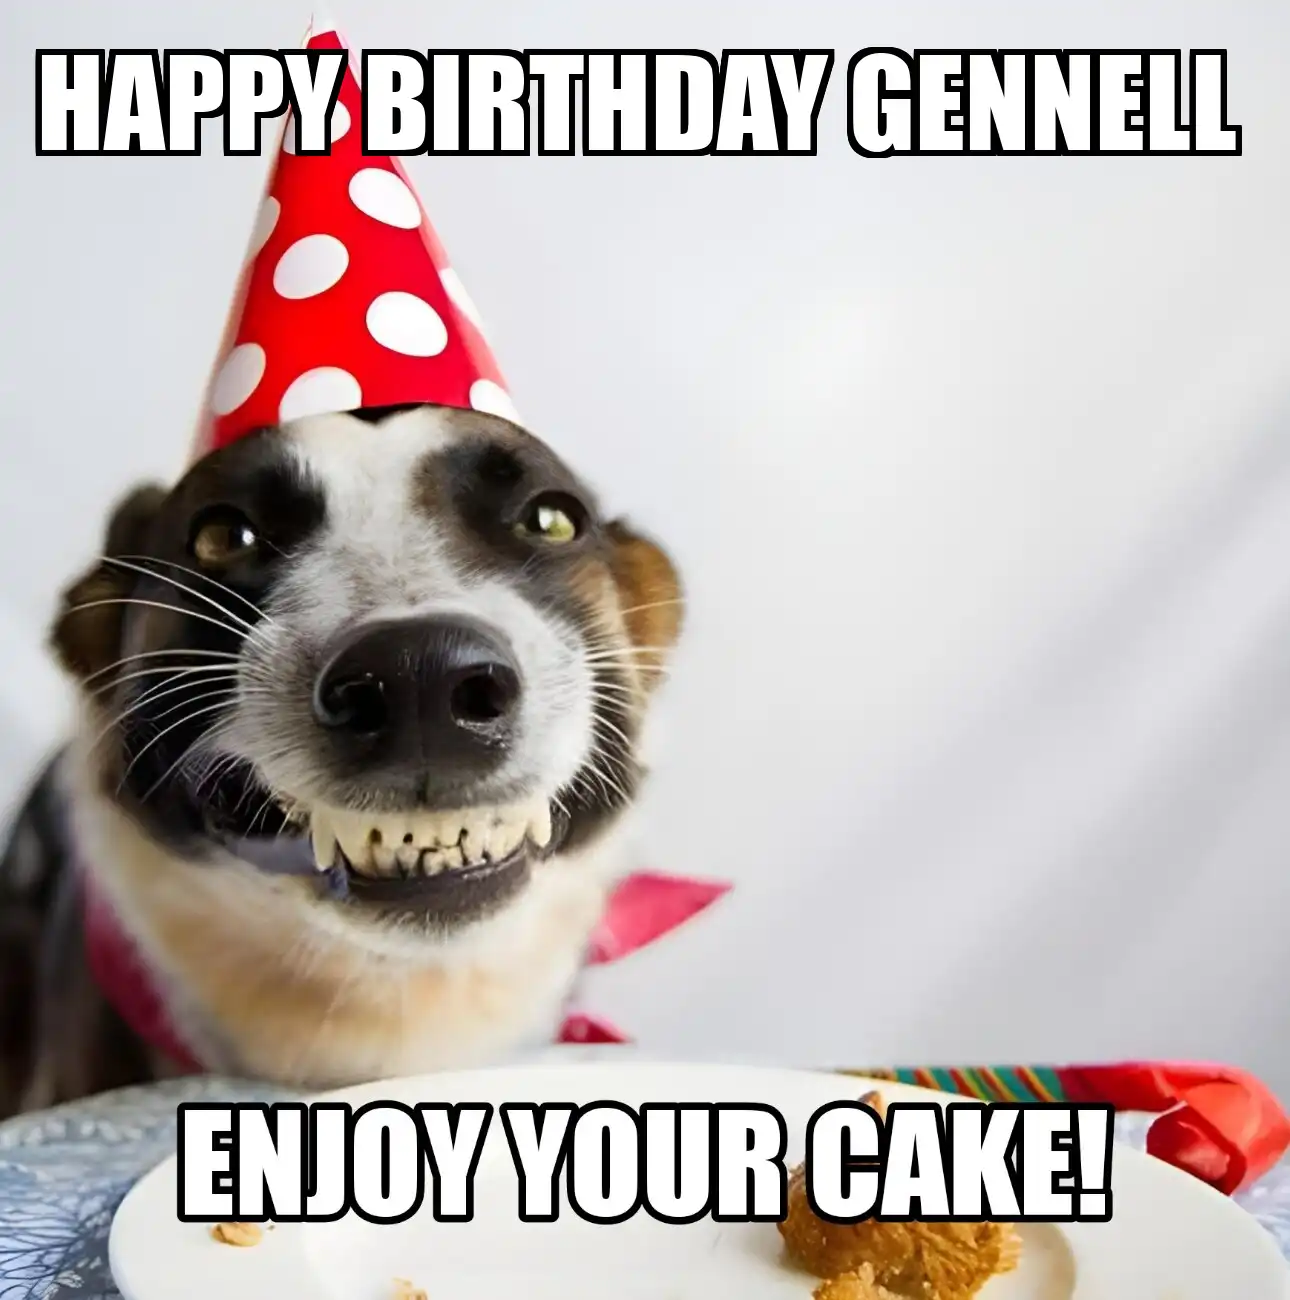 Happy Birthday Gennell Enjoy Your Cake Dog Meme